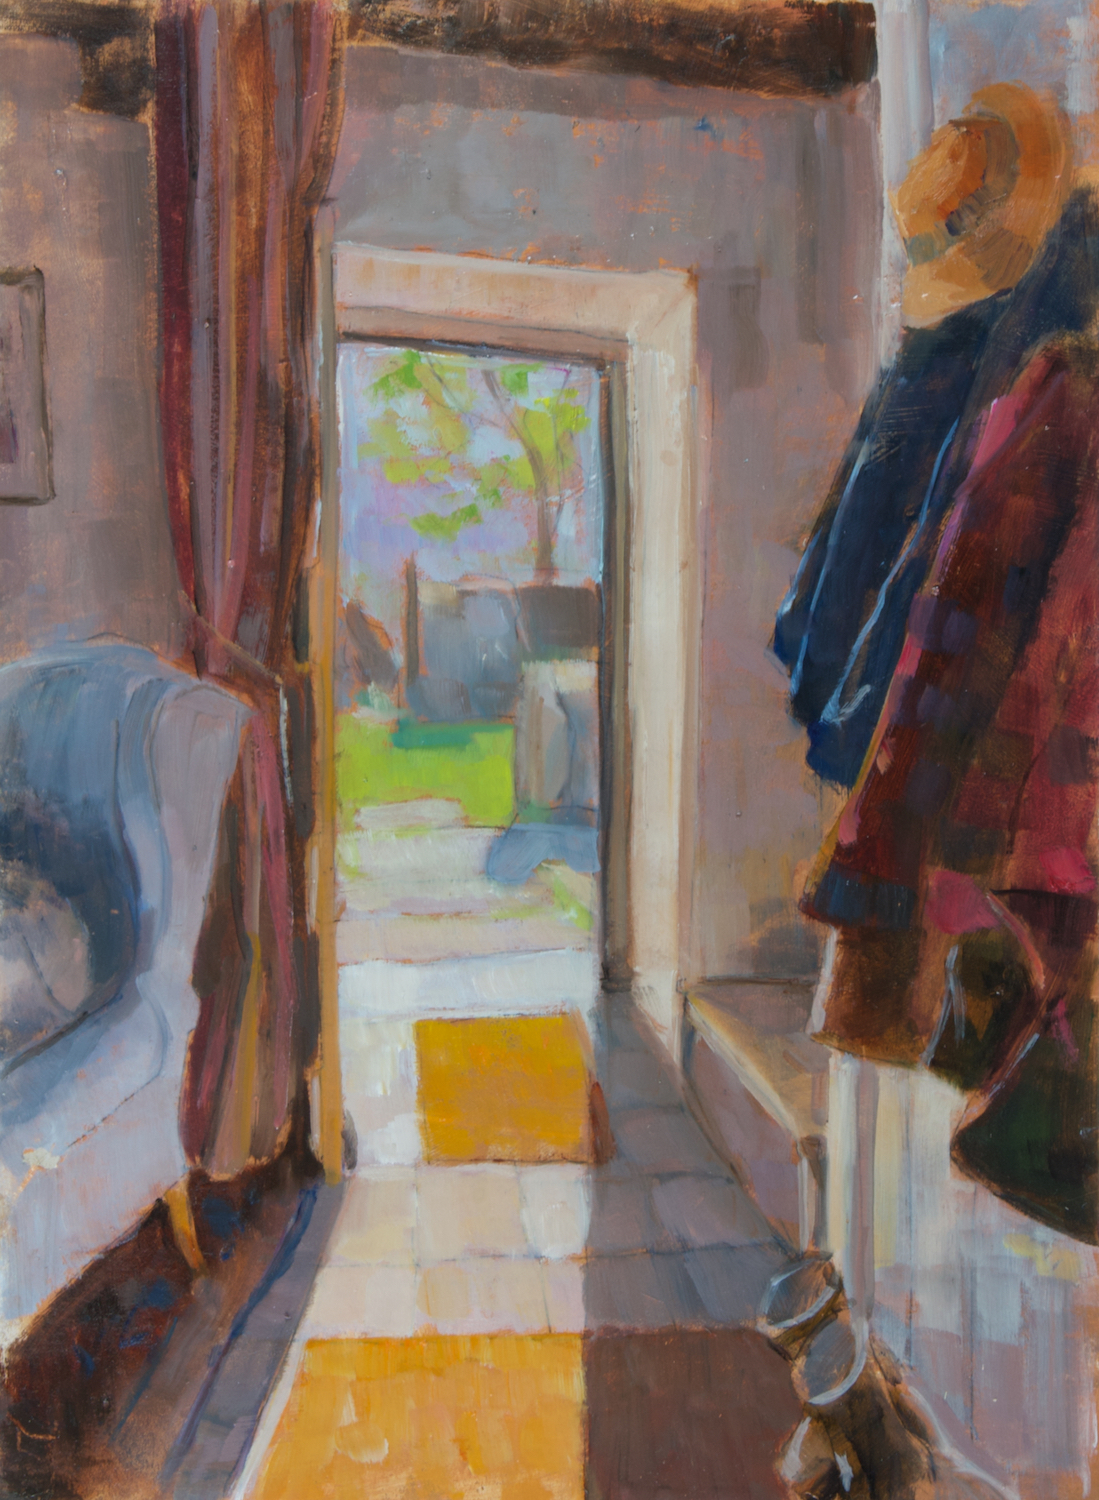 'Summer View Through Farmhouse Door', Sue Wales, Oil on board, 45 x 32 cm